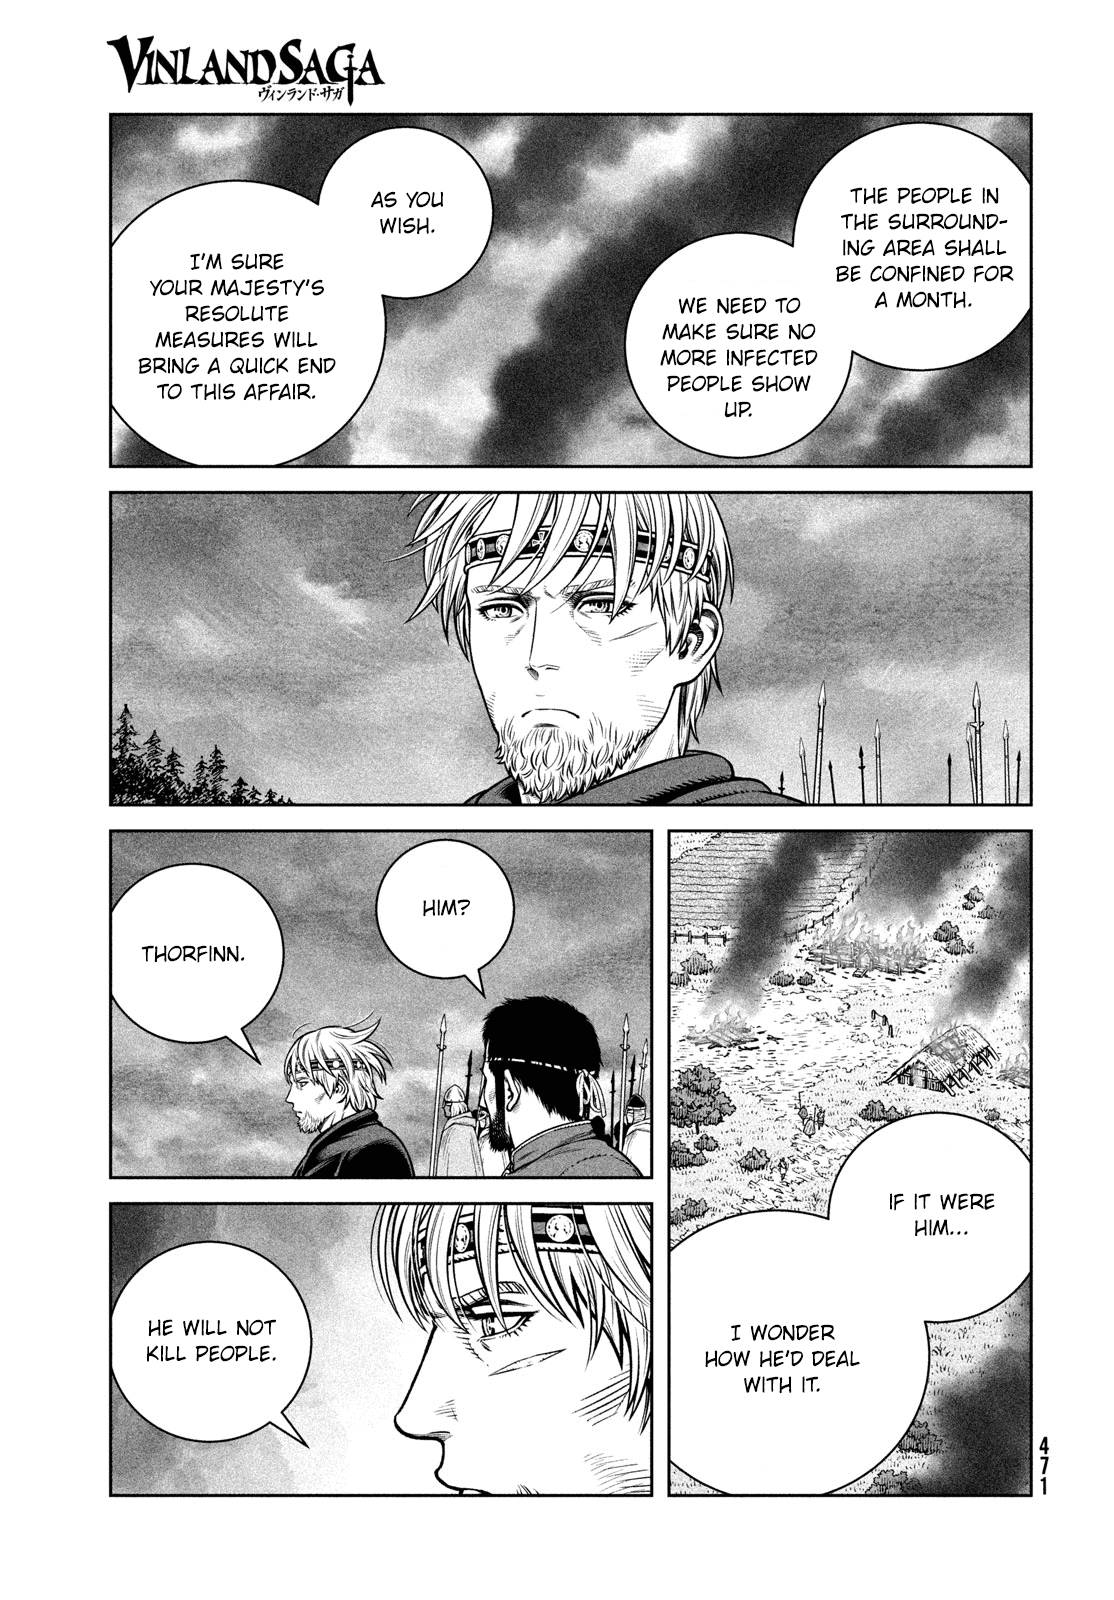 Vinland Saga Manga Manga Chapter - 202 - image 10